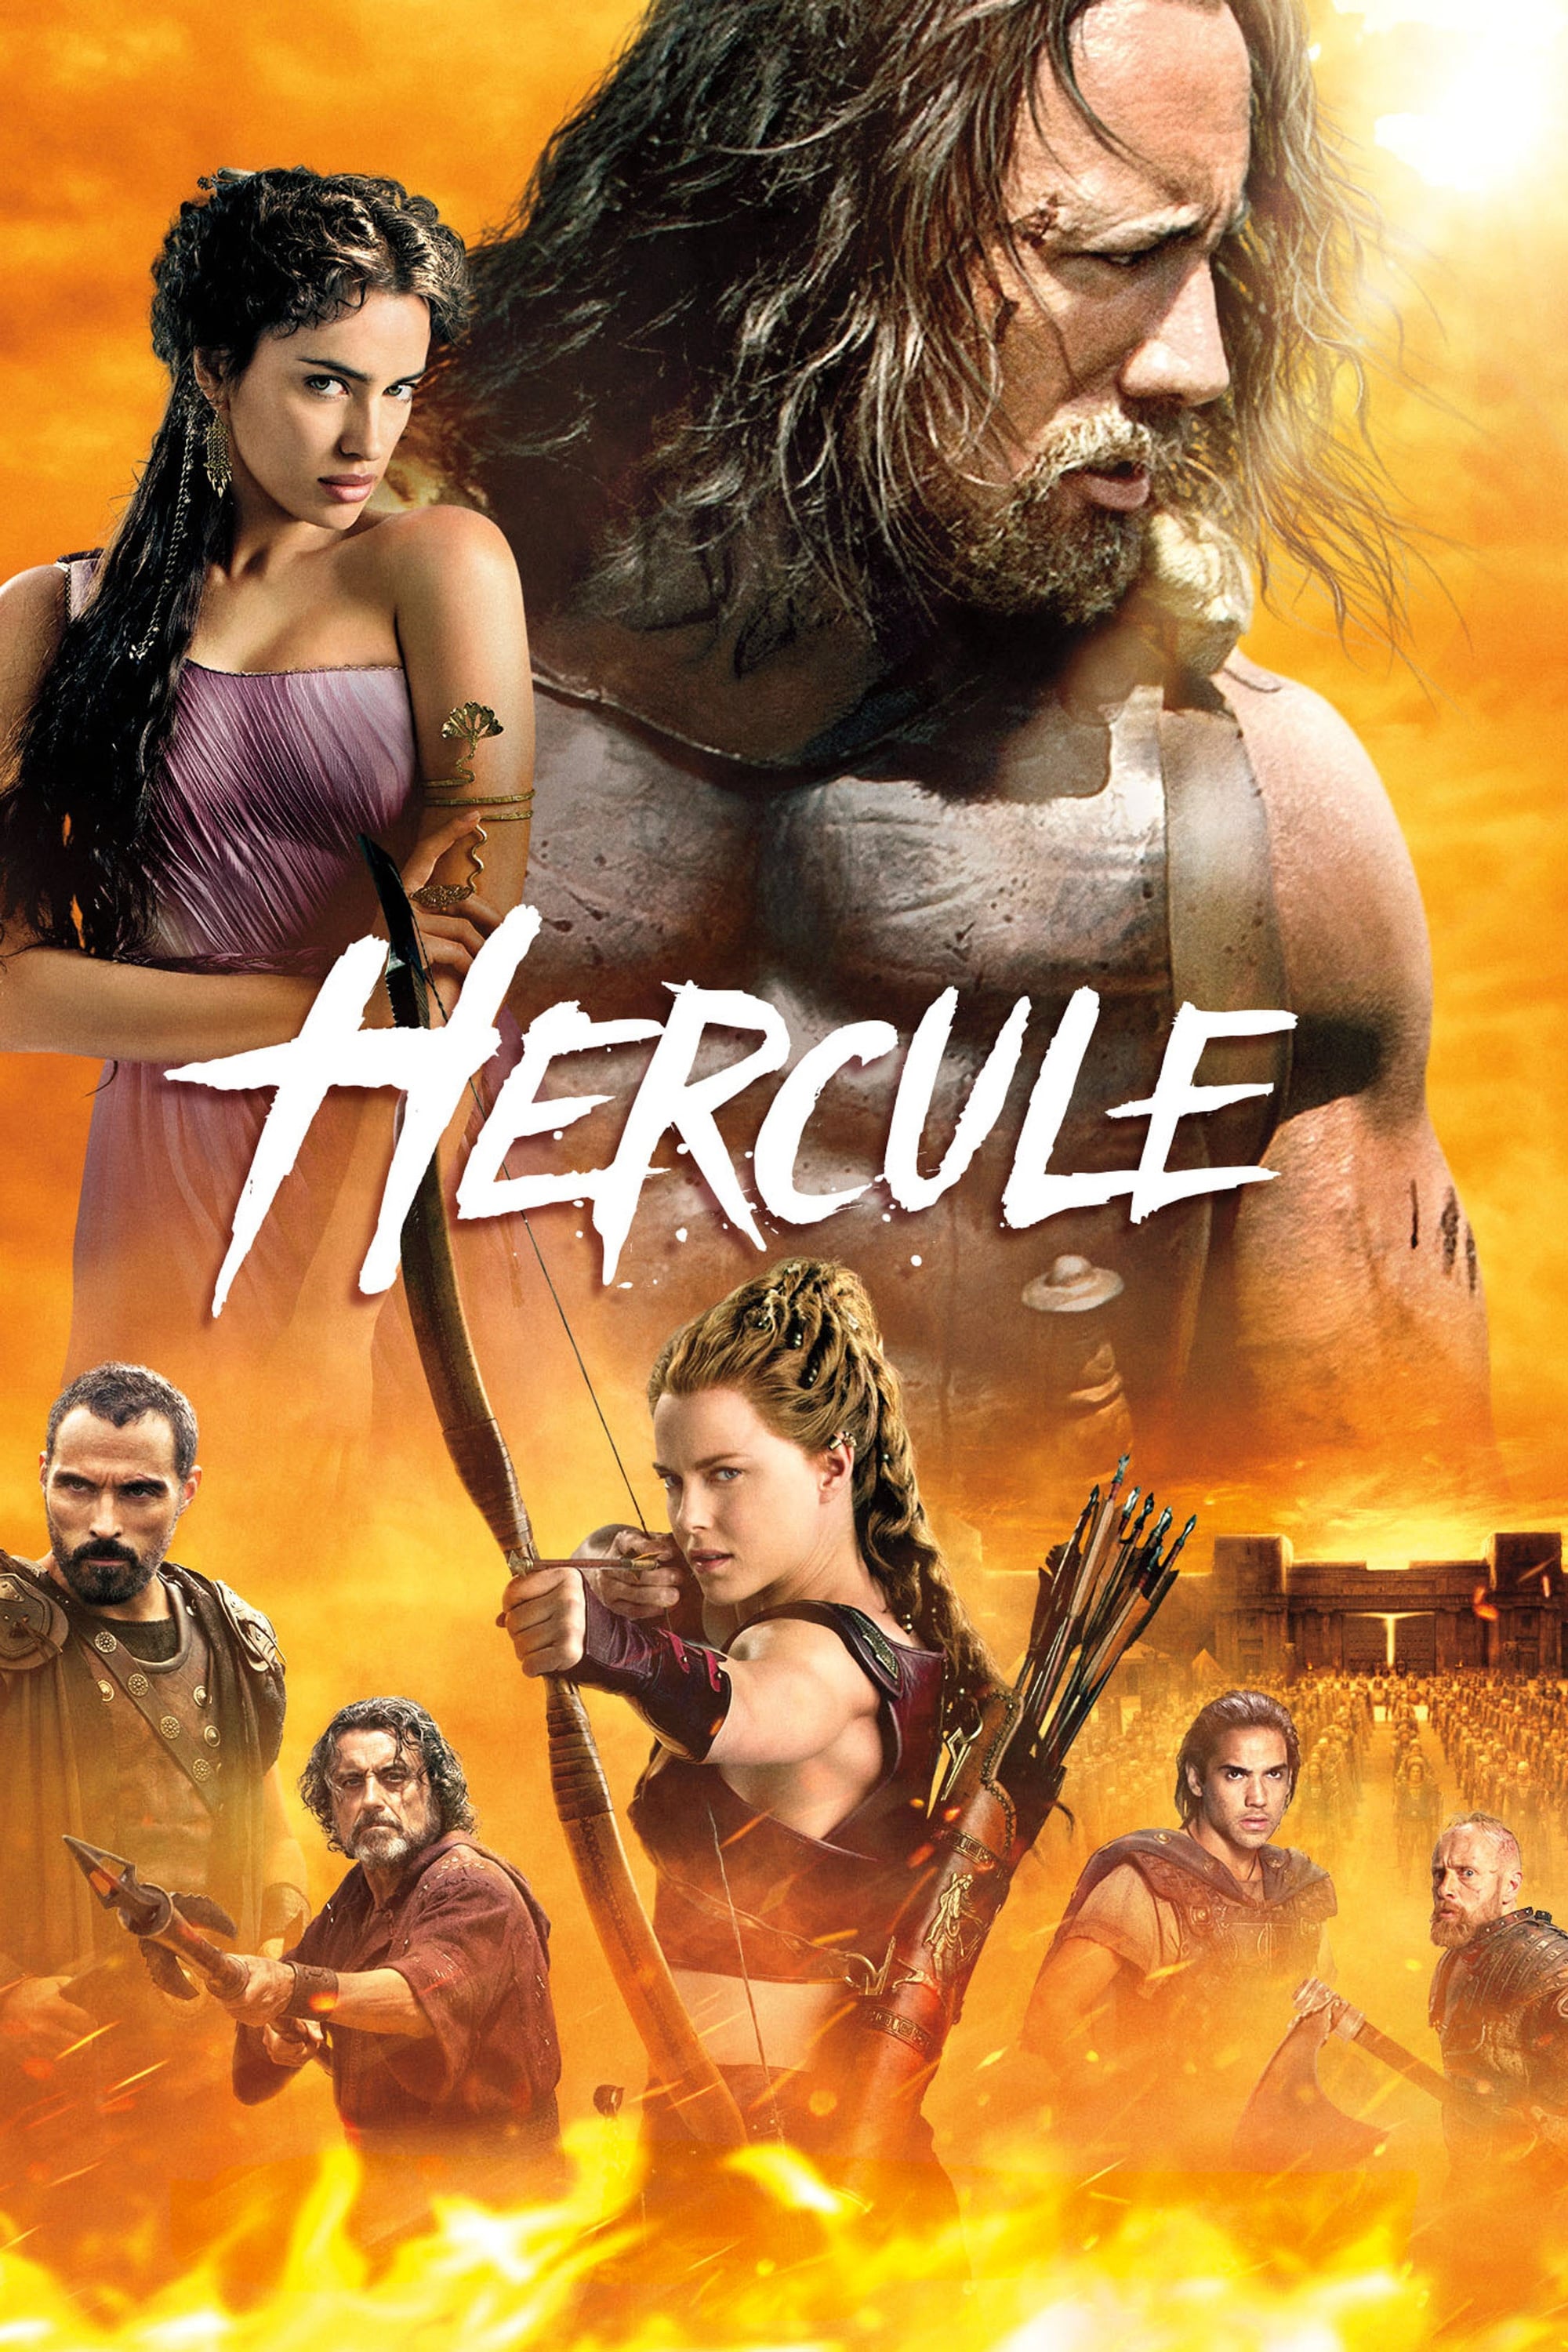 hercules movie review 2014